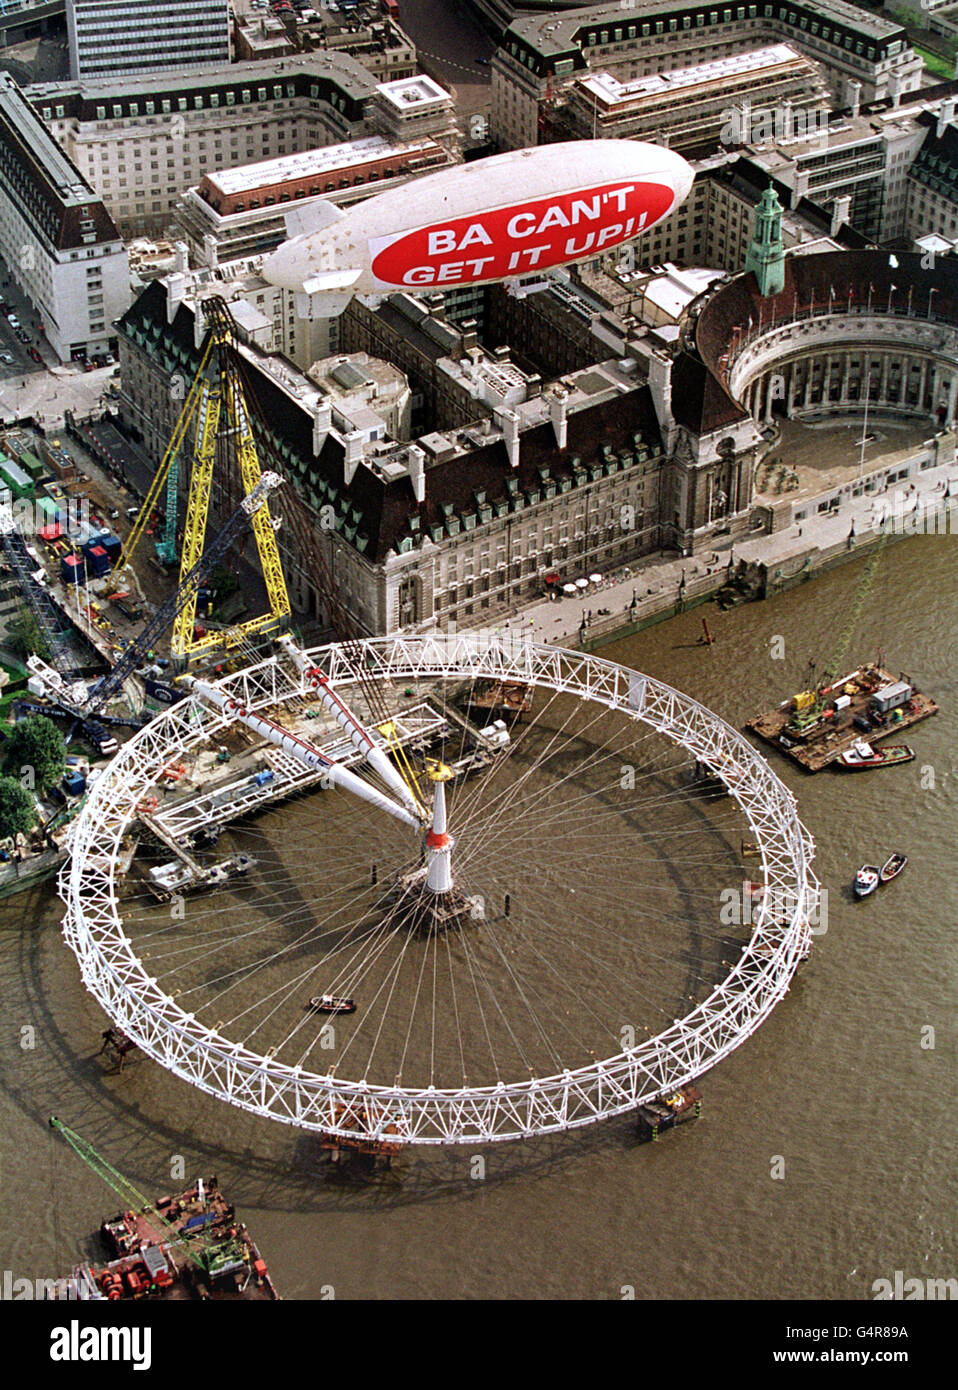 London Buildings and Landmarks - The Millennium Wheel - 1999. A Virgin light airship flies over the still horizontal Millennium Wheel (The London Eye) in central London . Stock Photo